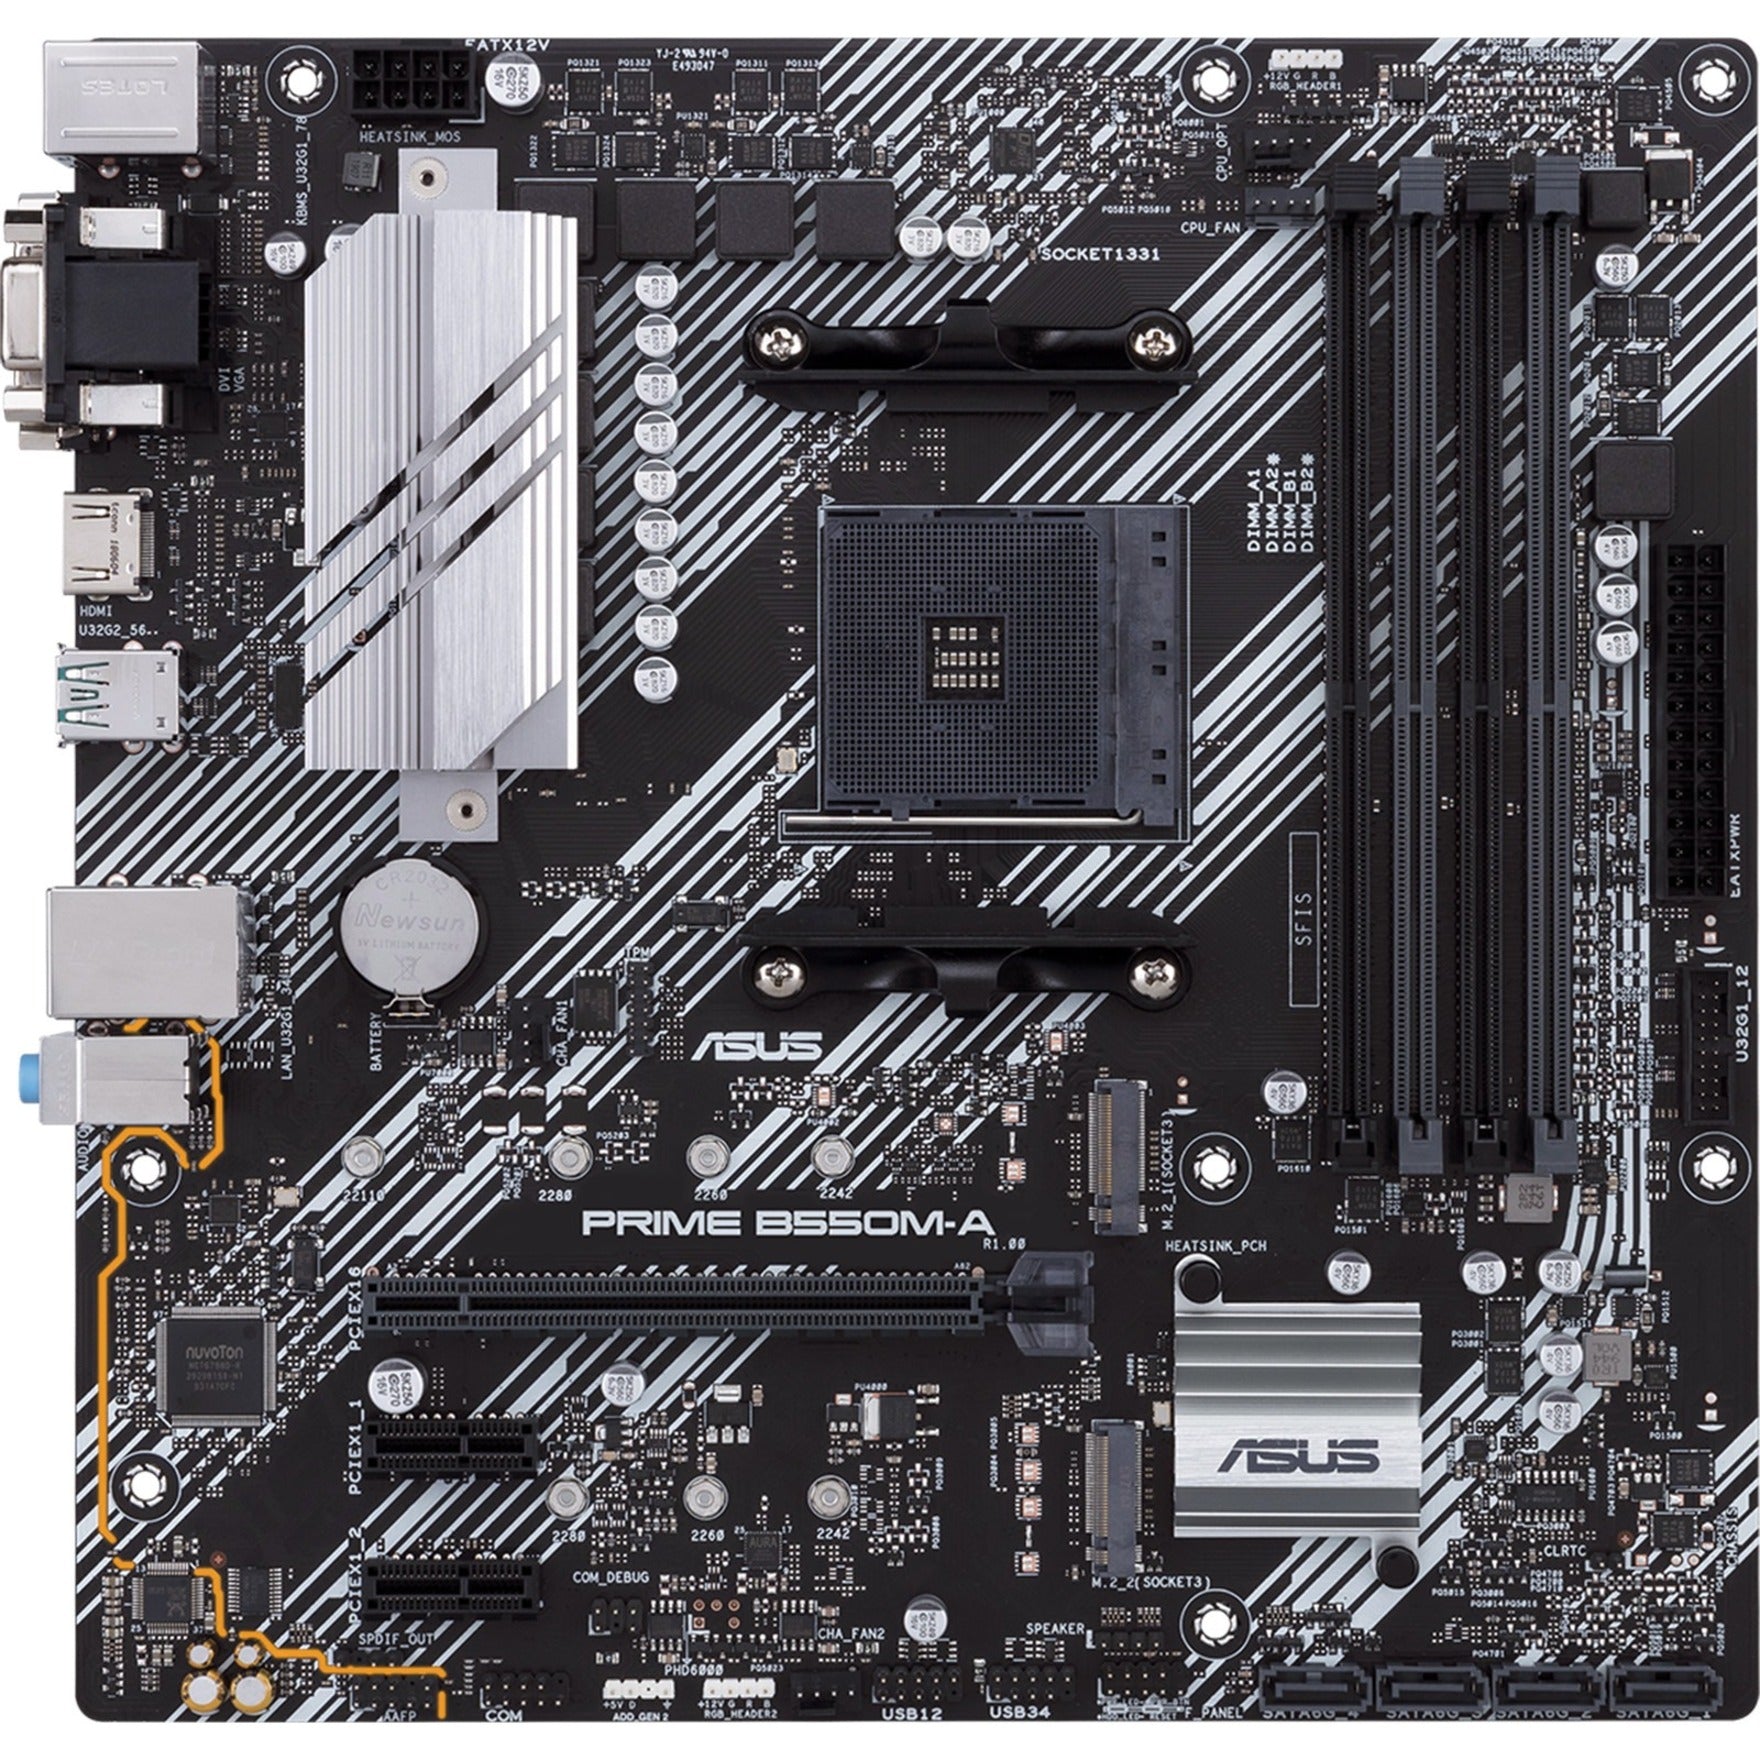 Asus PRIME B550M-A/CSM Desktop Motherboard, AMD B550 Chipset, Micro ATX Form Factor